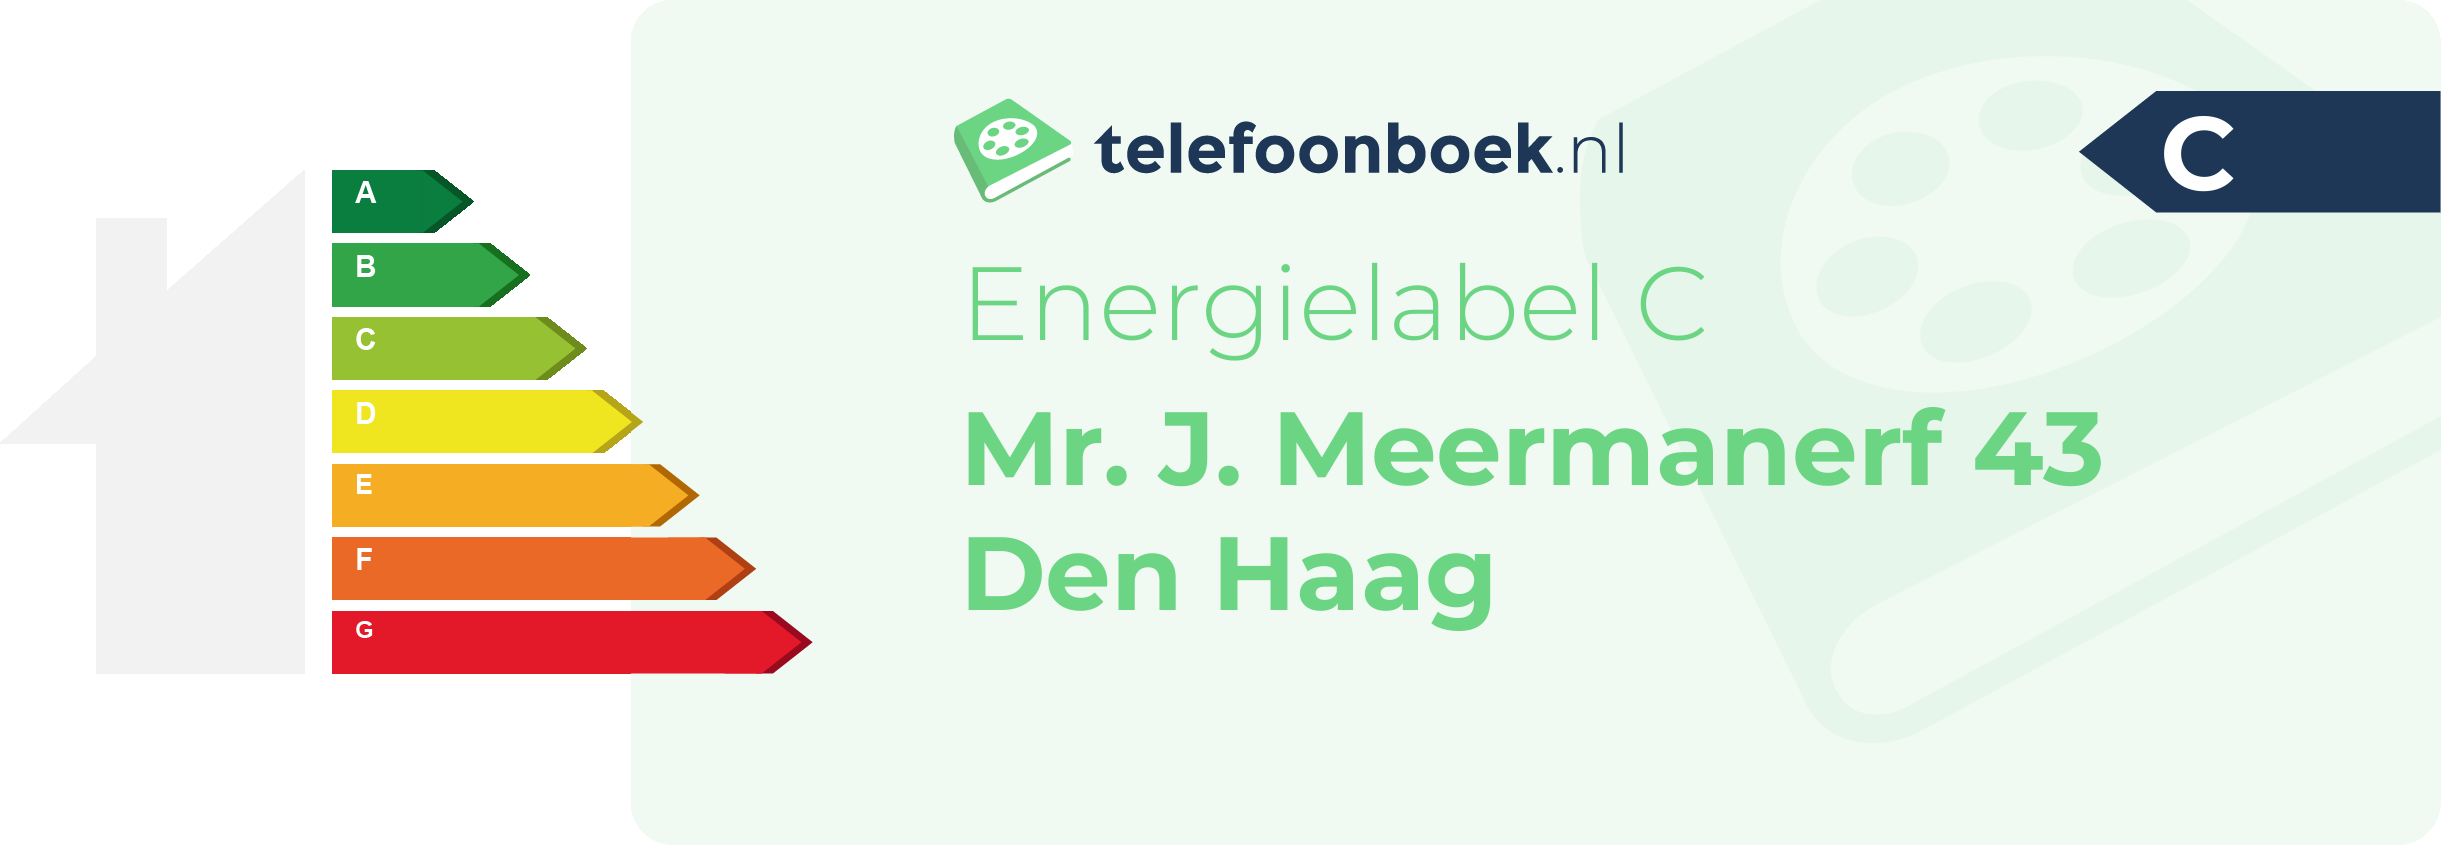 Energielabel Mr. J. Meermanerf 43 Den Haag